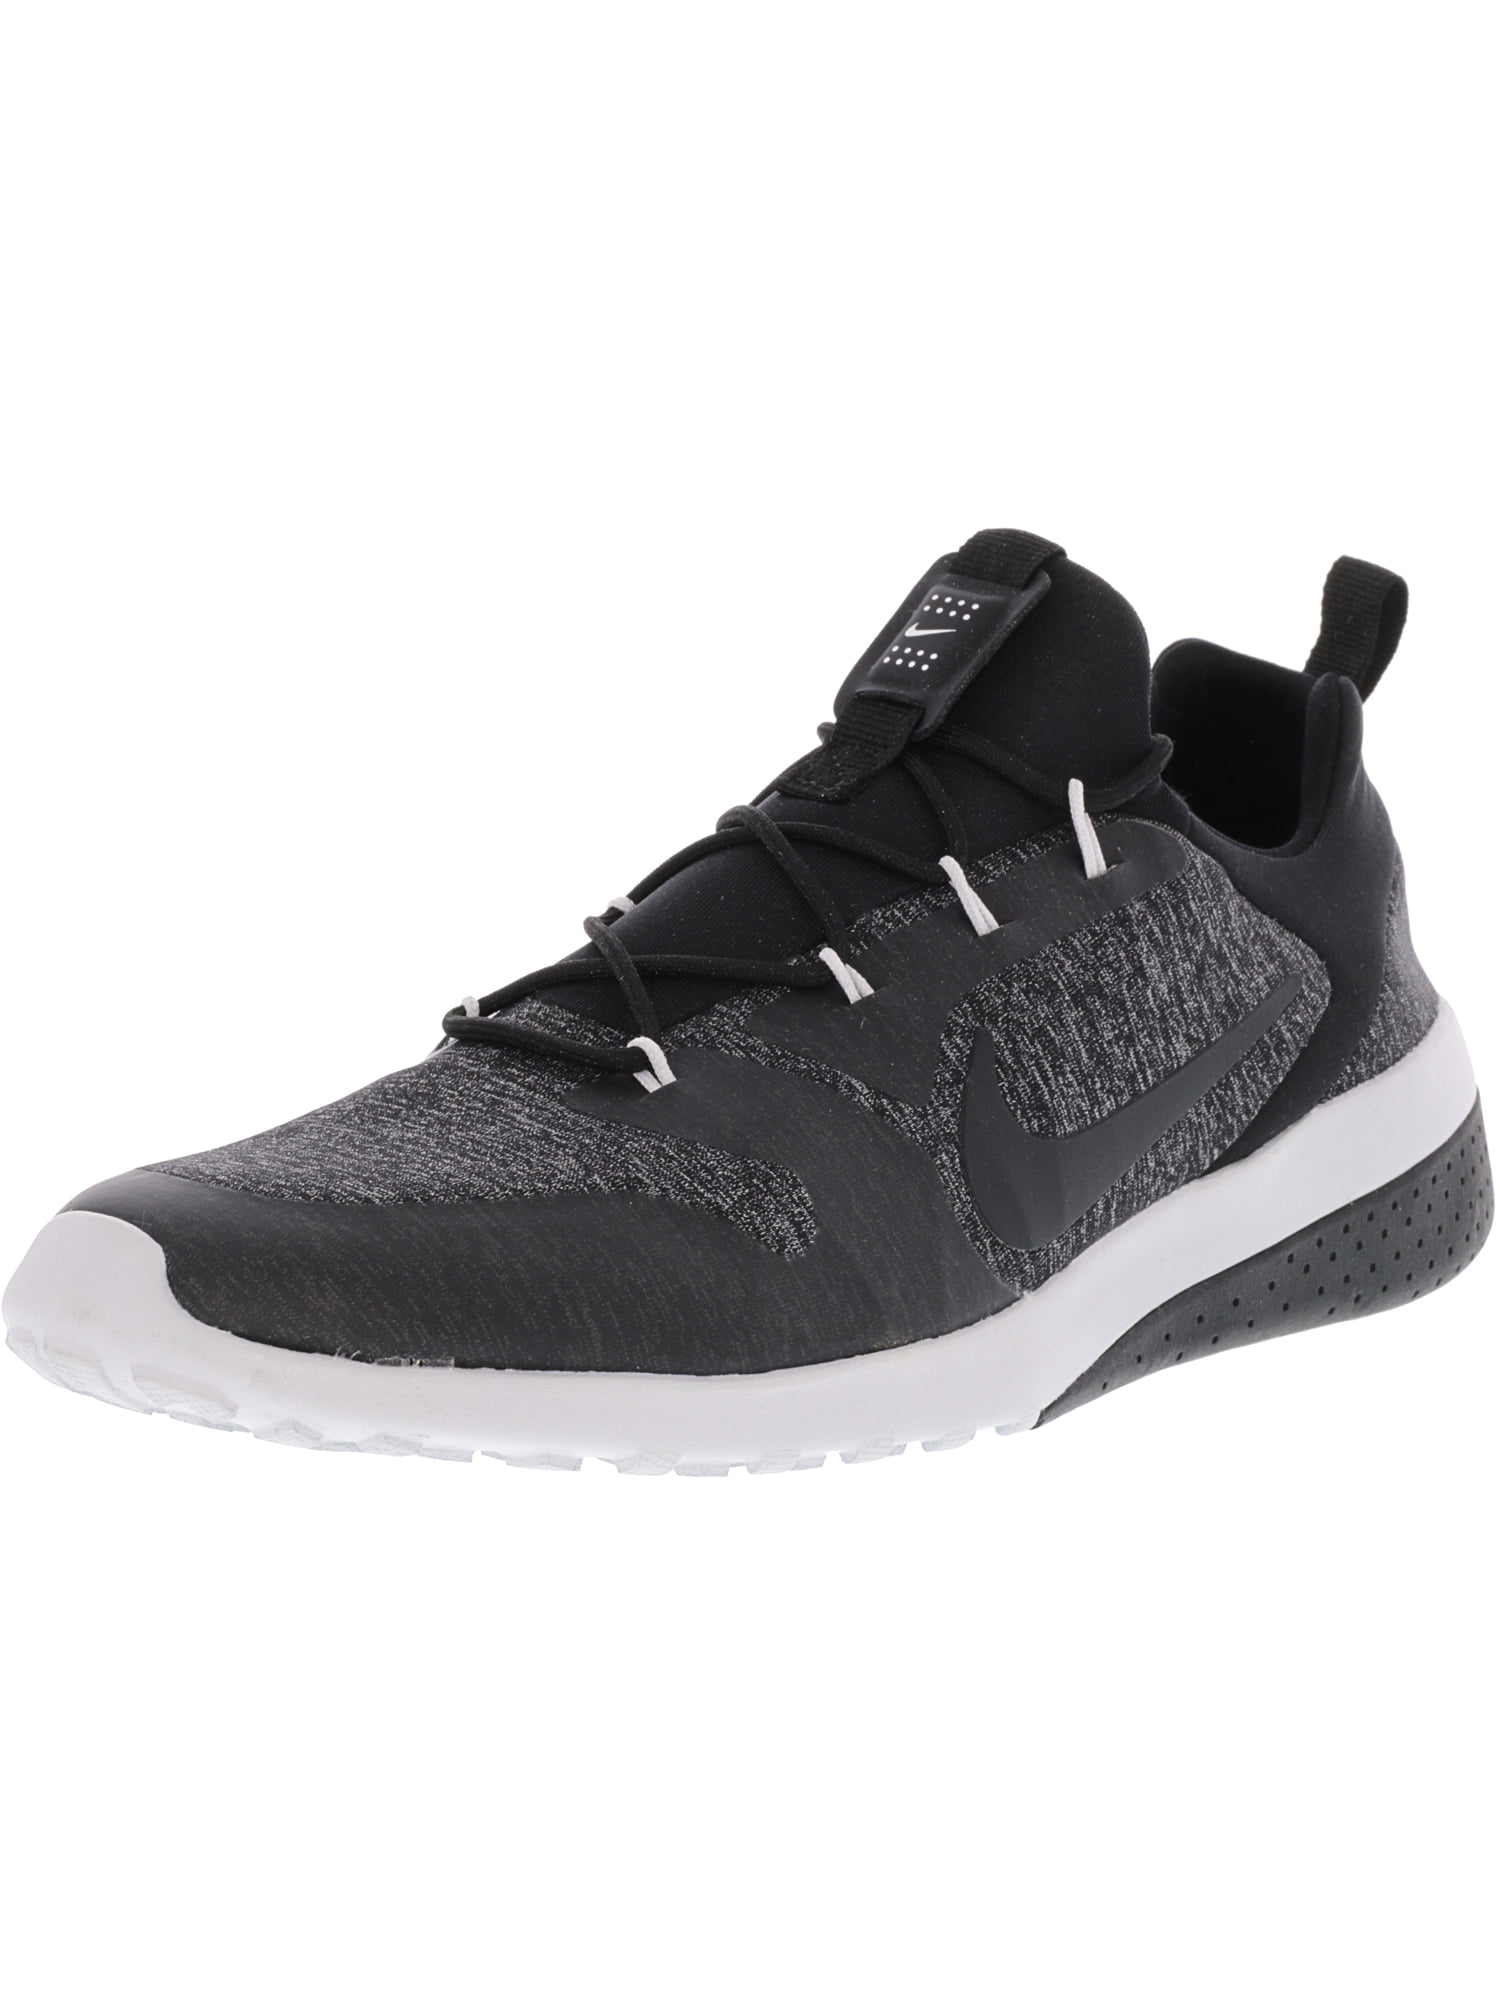 Nike Men's Ck Racer Black / - White Ankle-High Shoe 14M - Walmart.com